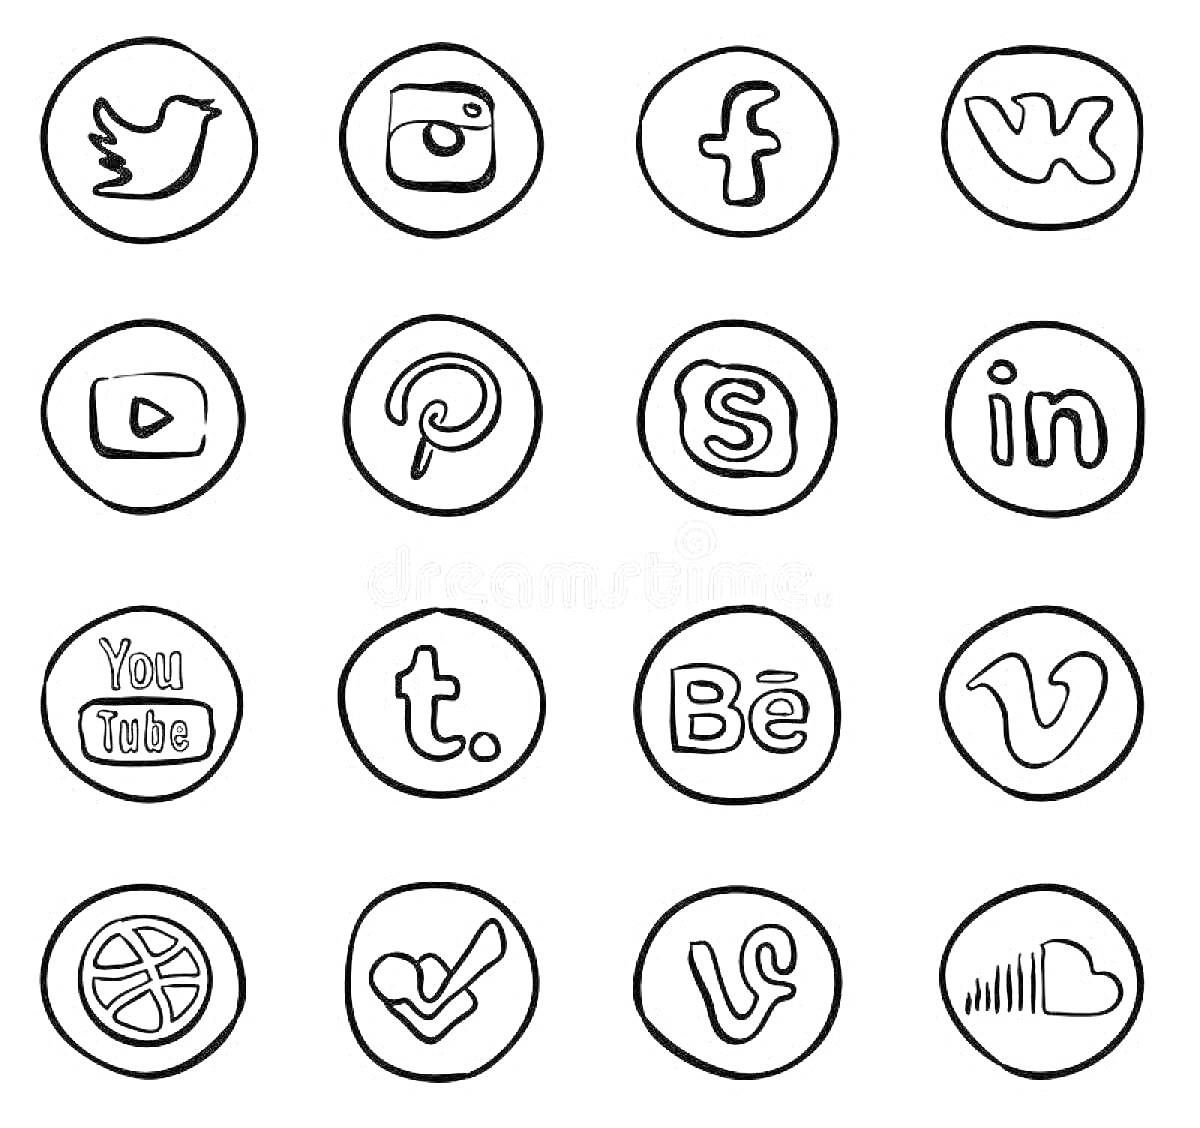 Раскраска Логотипы приложений: Twitter, Instagram, Facebook, VK, YouTube, Pinterest, Skype, LinkedIn, YouTube, Tumblr, Behance, Vimeo, Dribbble, Foursquare, Vine, SoundCloud